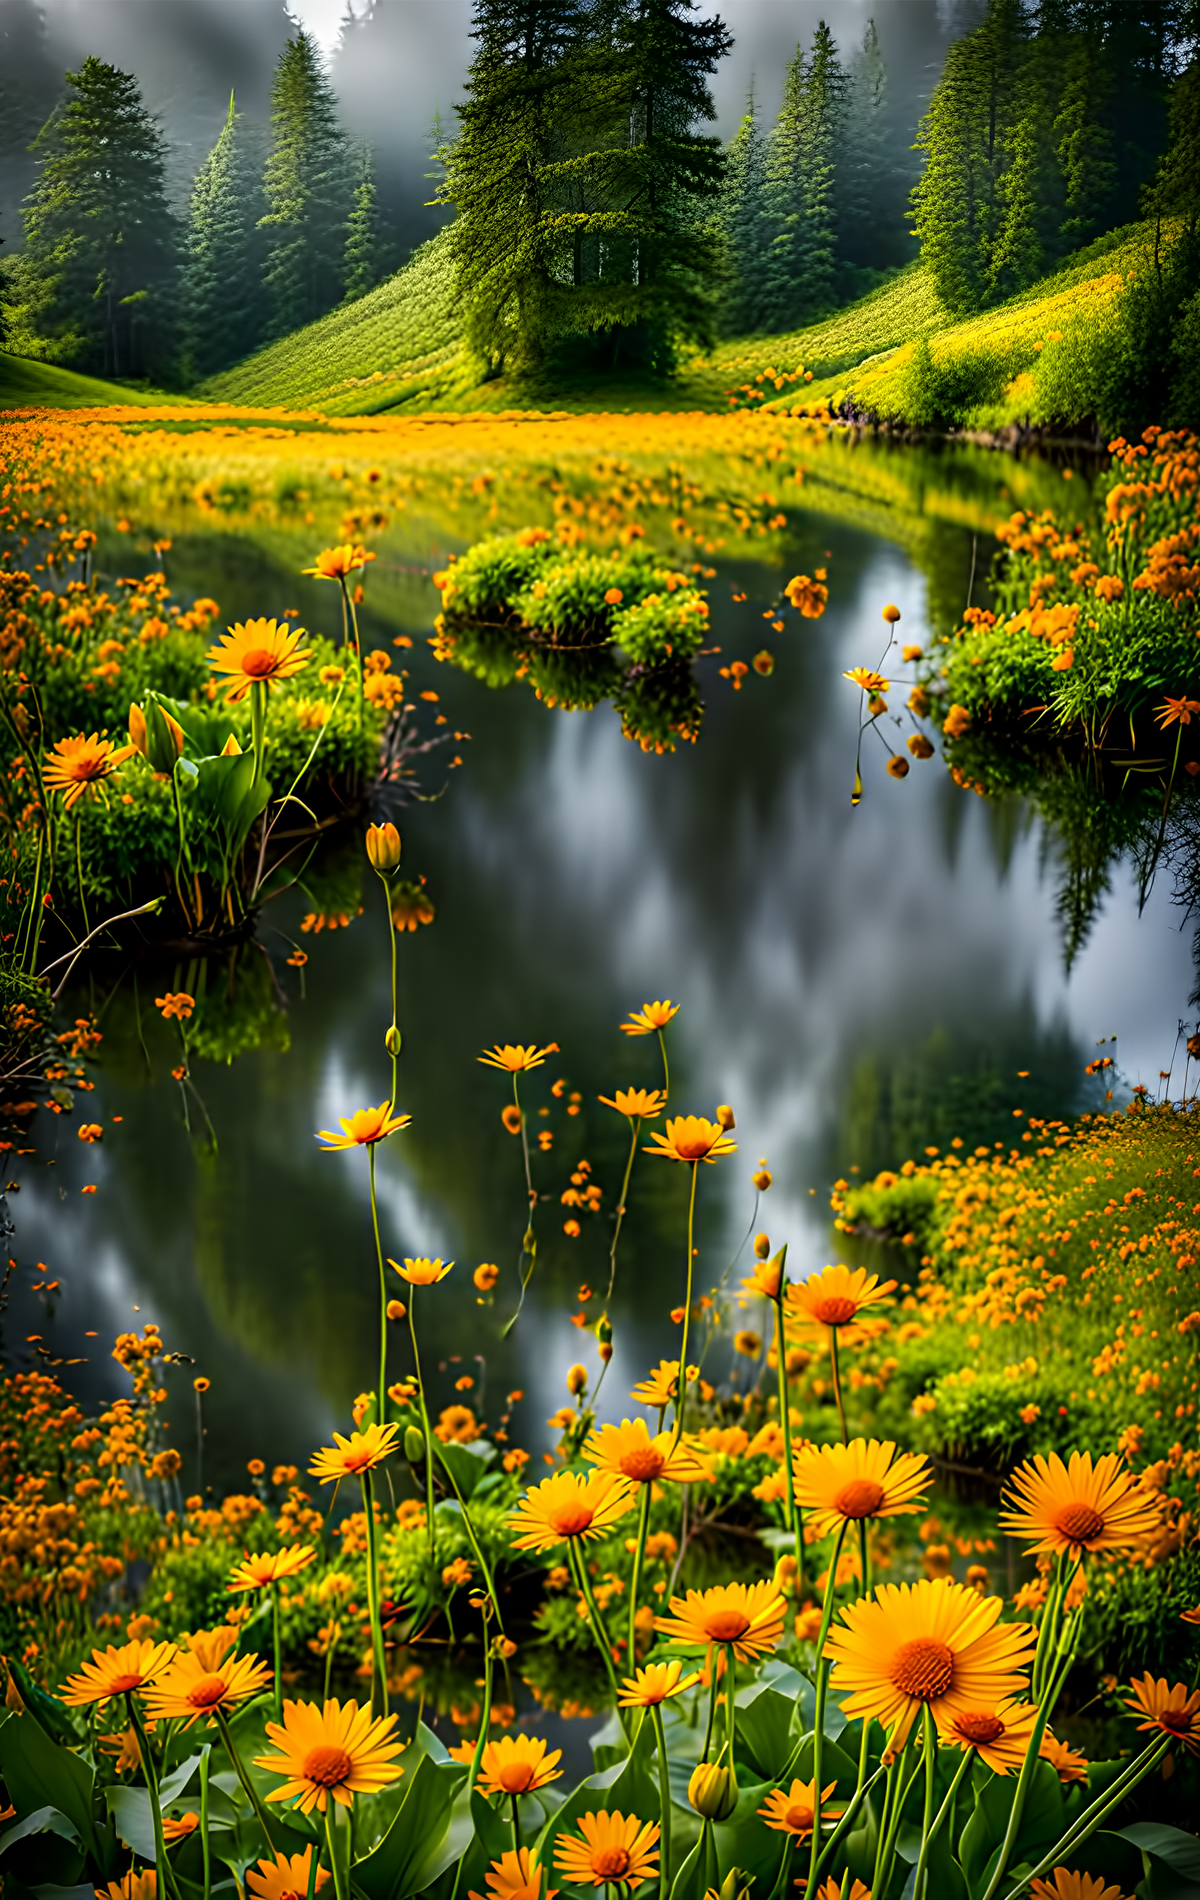 The hidden stream of daisies